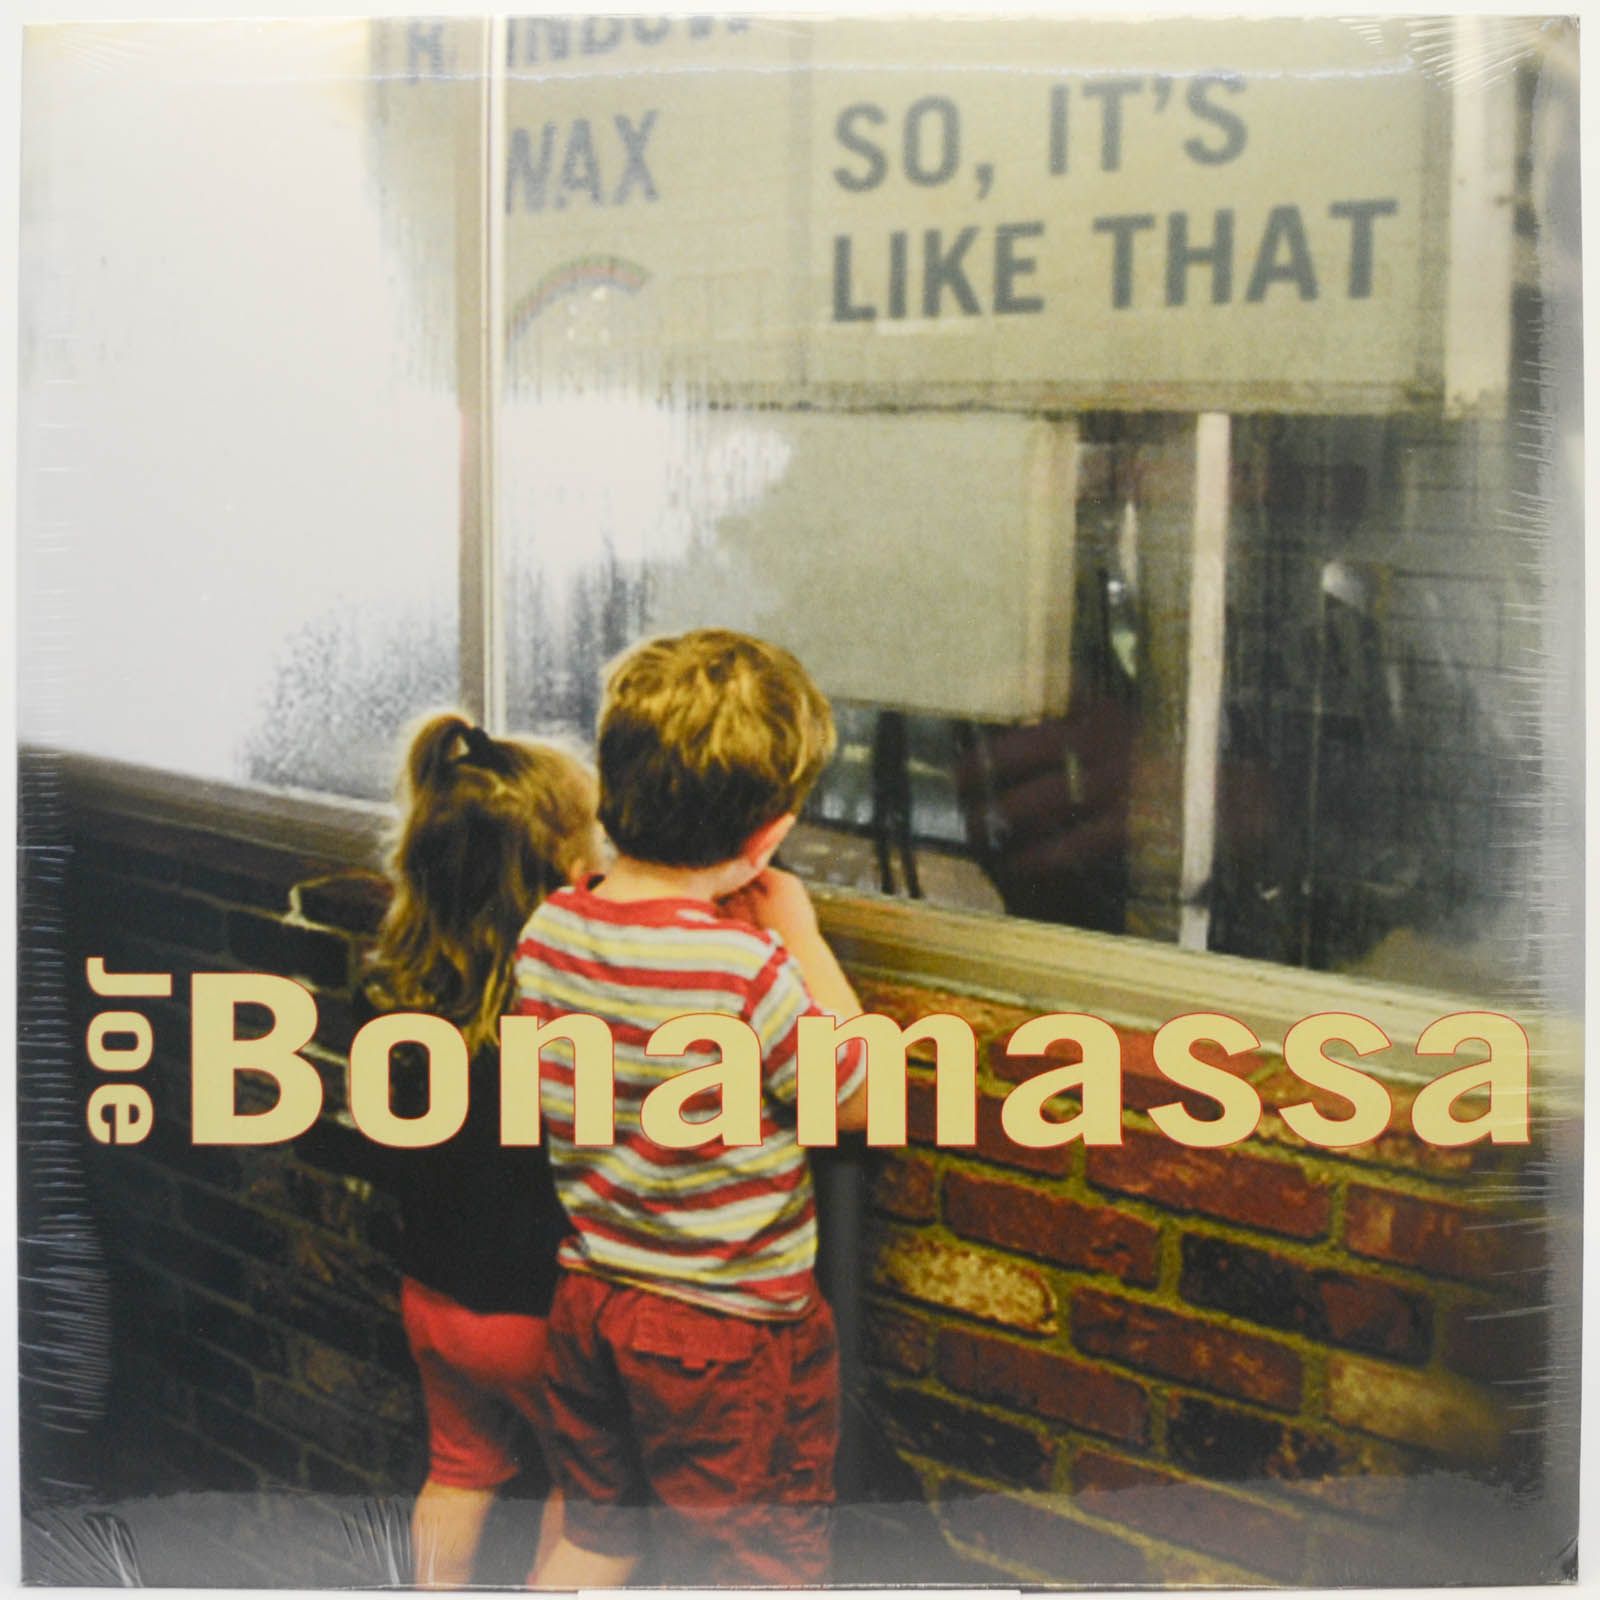 Joe Bonamassa — So It's Like That, 2002